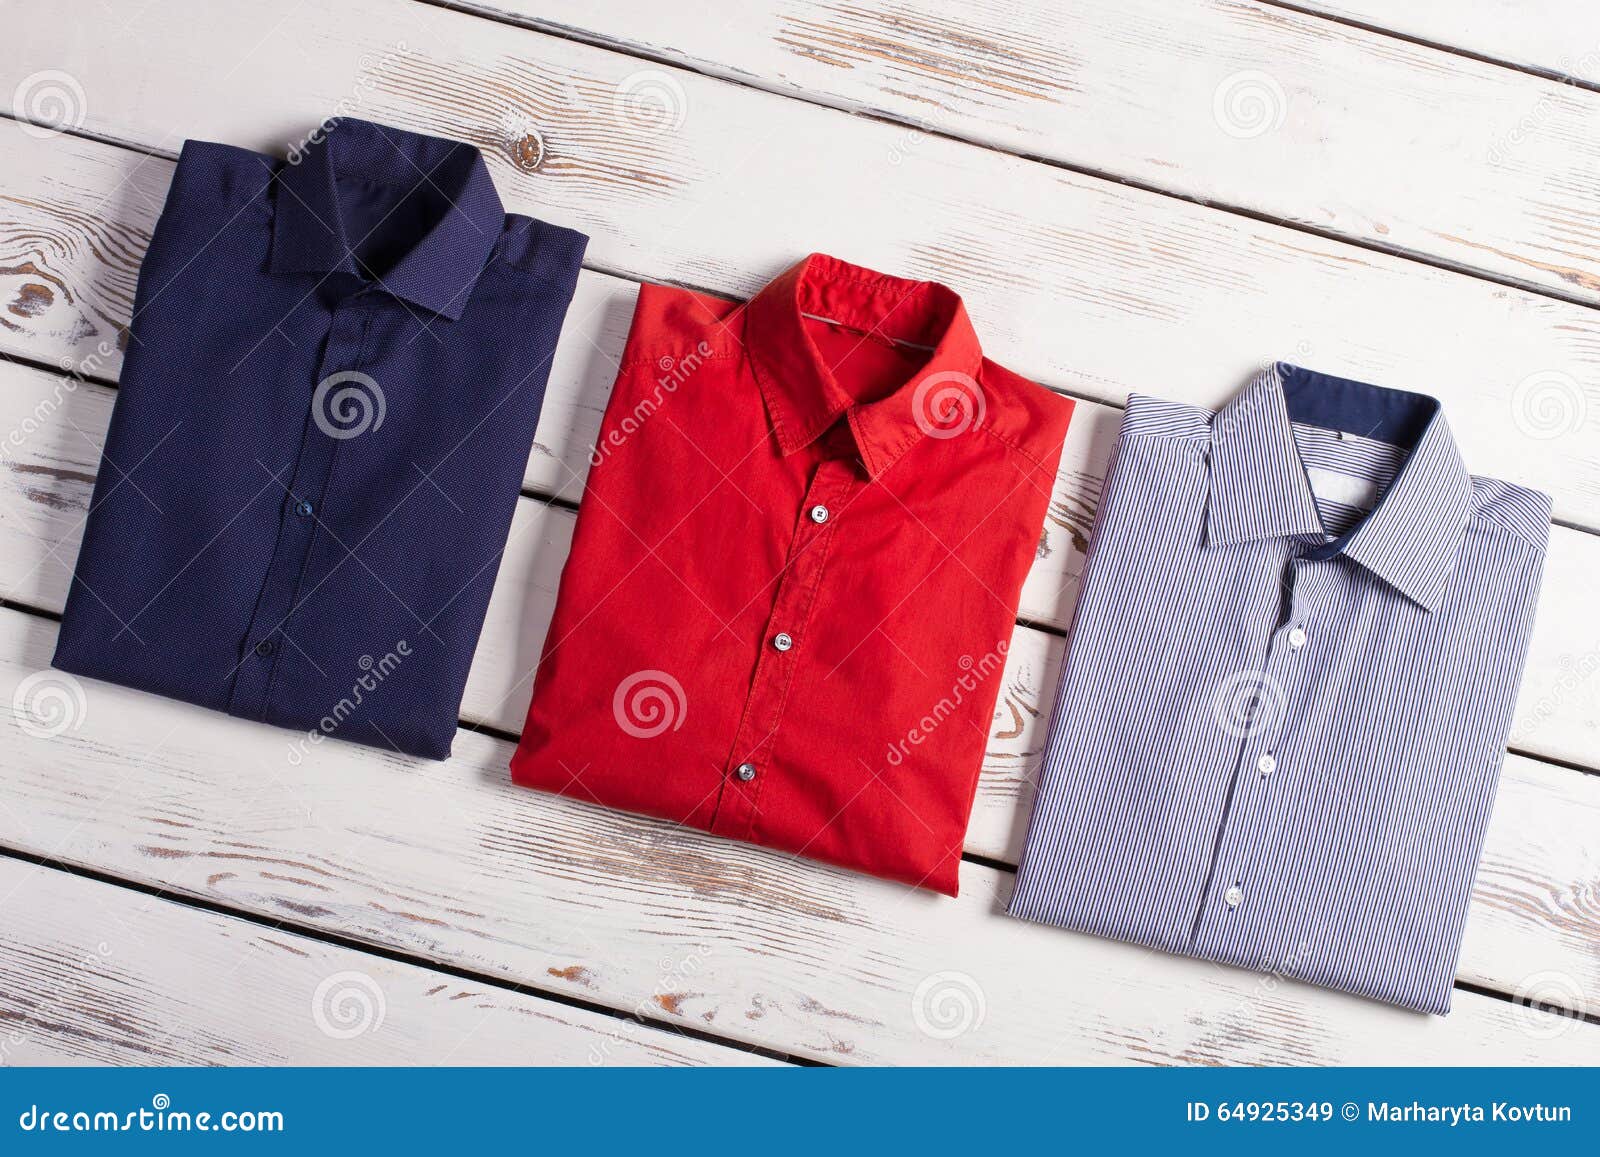 Business Classic Men S Shirts. Stock Image - Image of merchandising ...